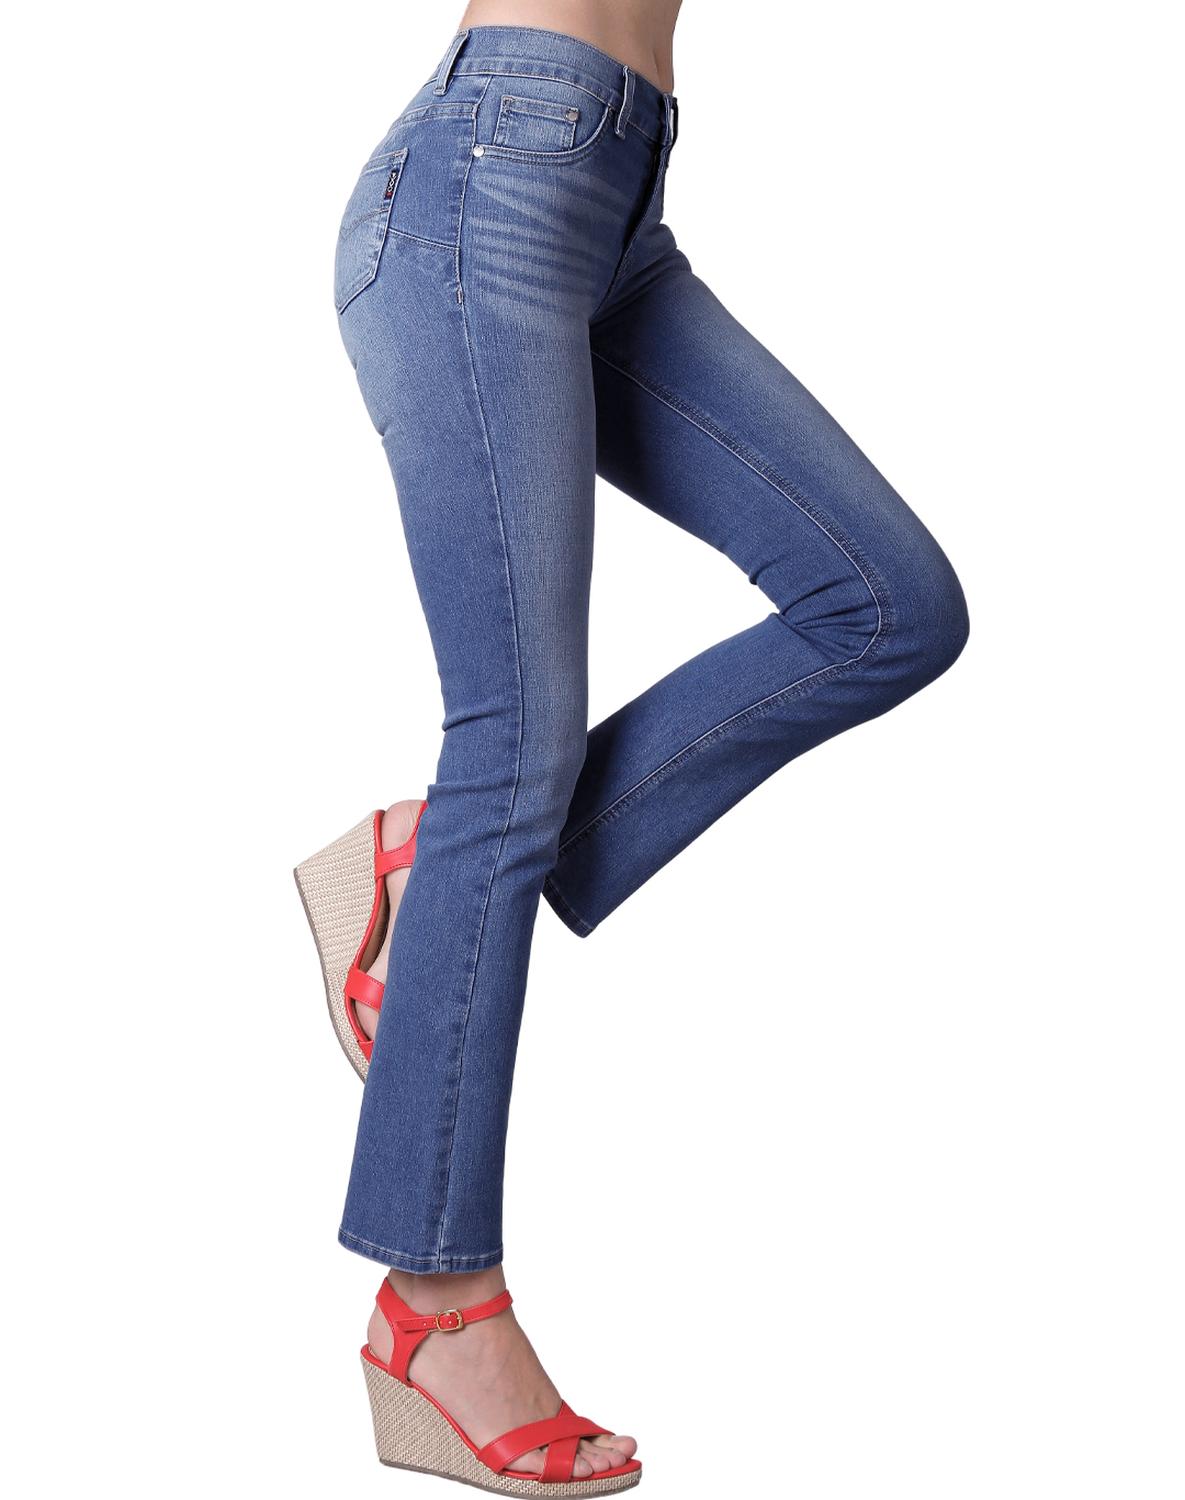 Jeans Moda Recto Mujer Azul Oggi Yess 59104604